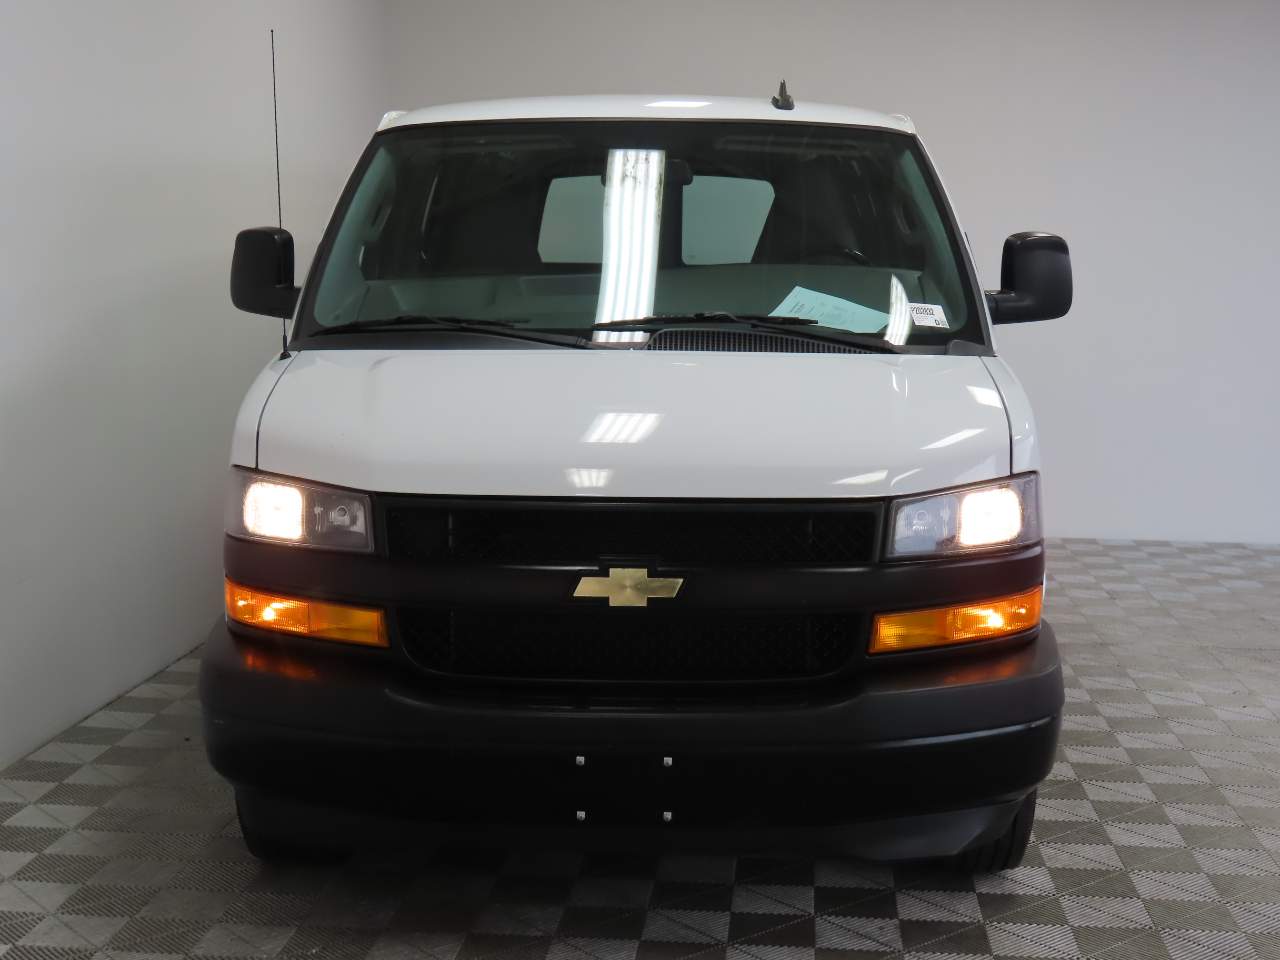 2021 Chevrolet Express 2500